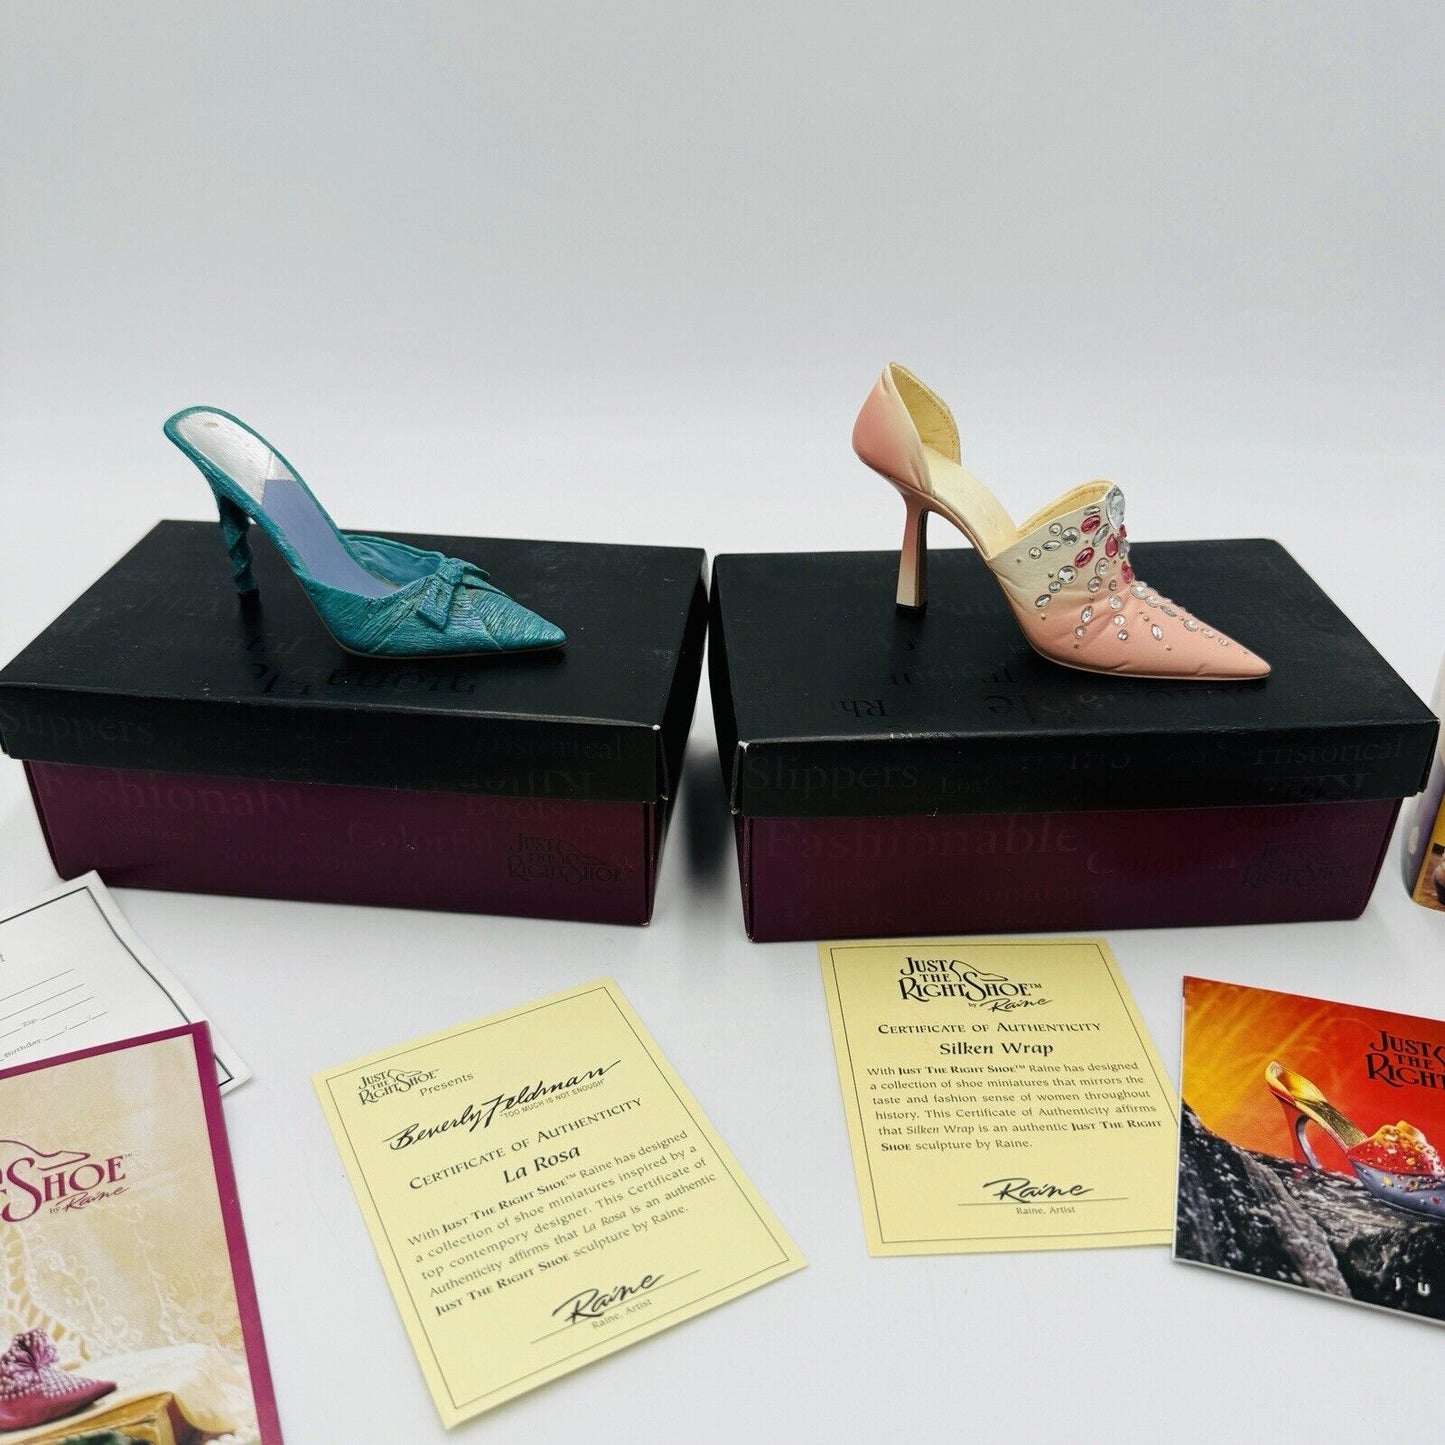 Just The Righ Shoe By Raine Miniatures Figurine Shoes Fashion Shoe Mini